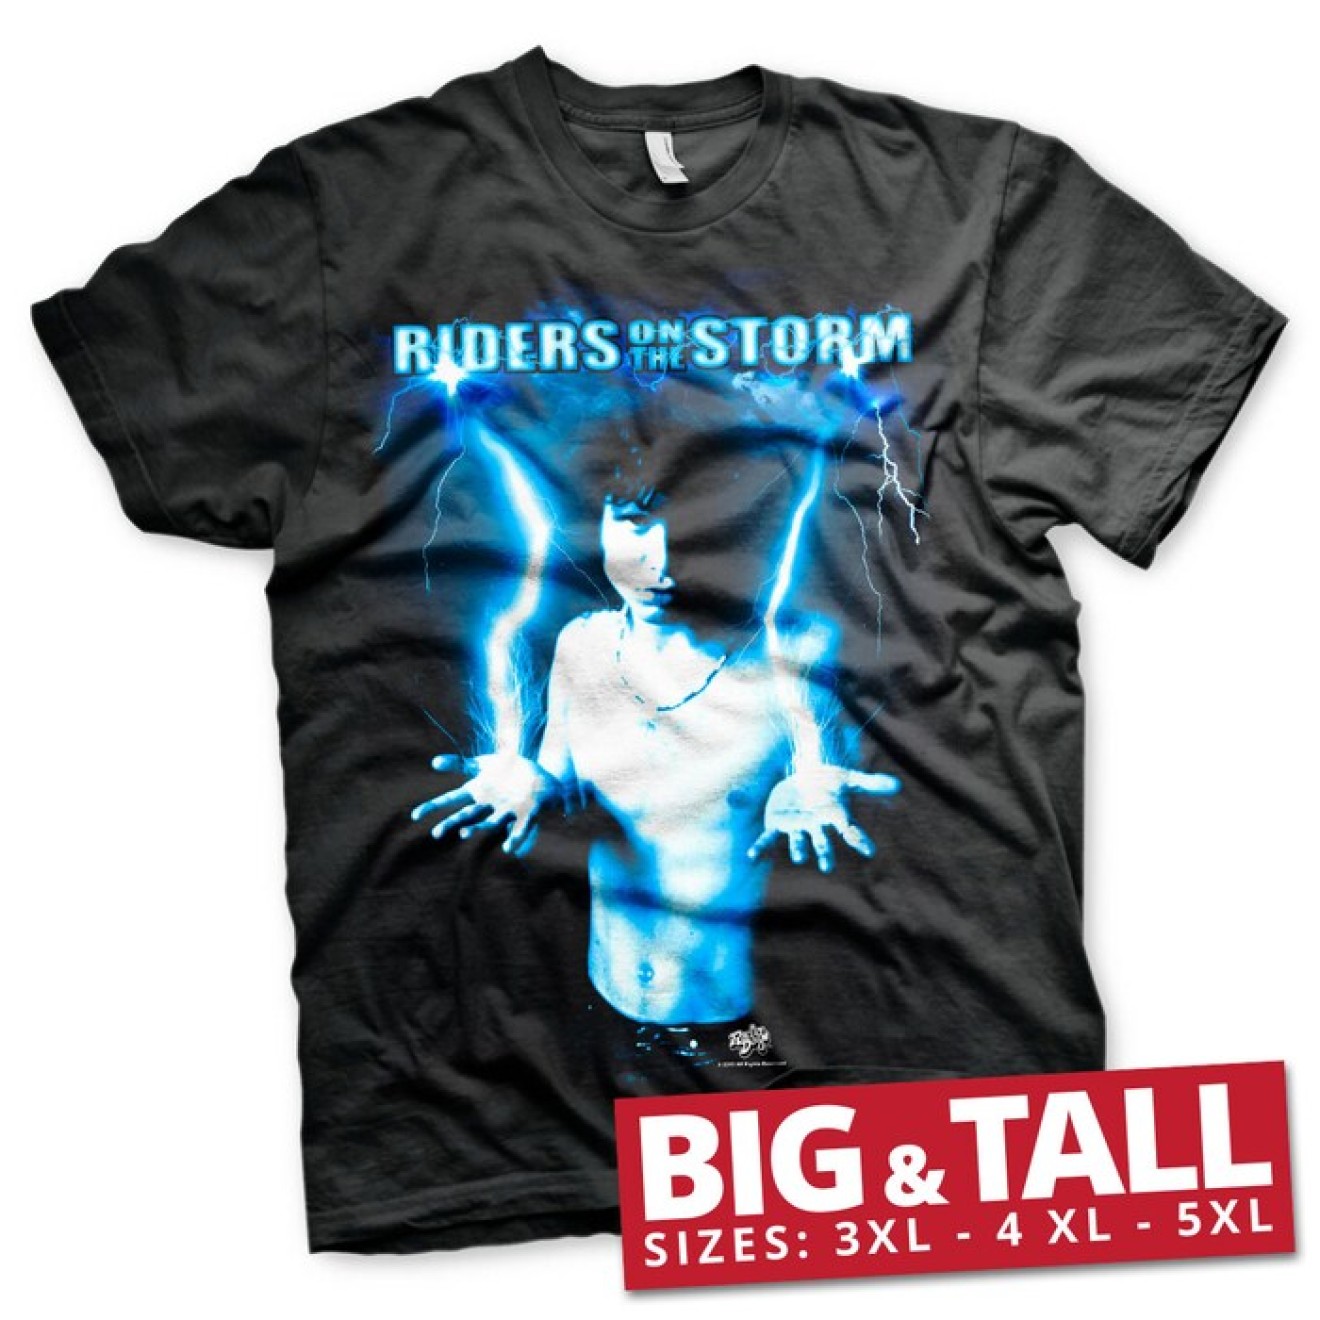 Riders On The Storm - Jim Morrison Big & Tall T-Shirt